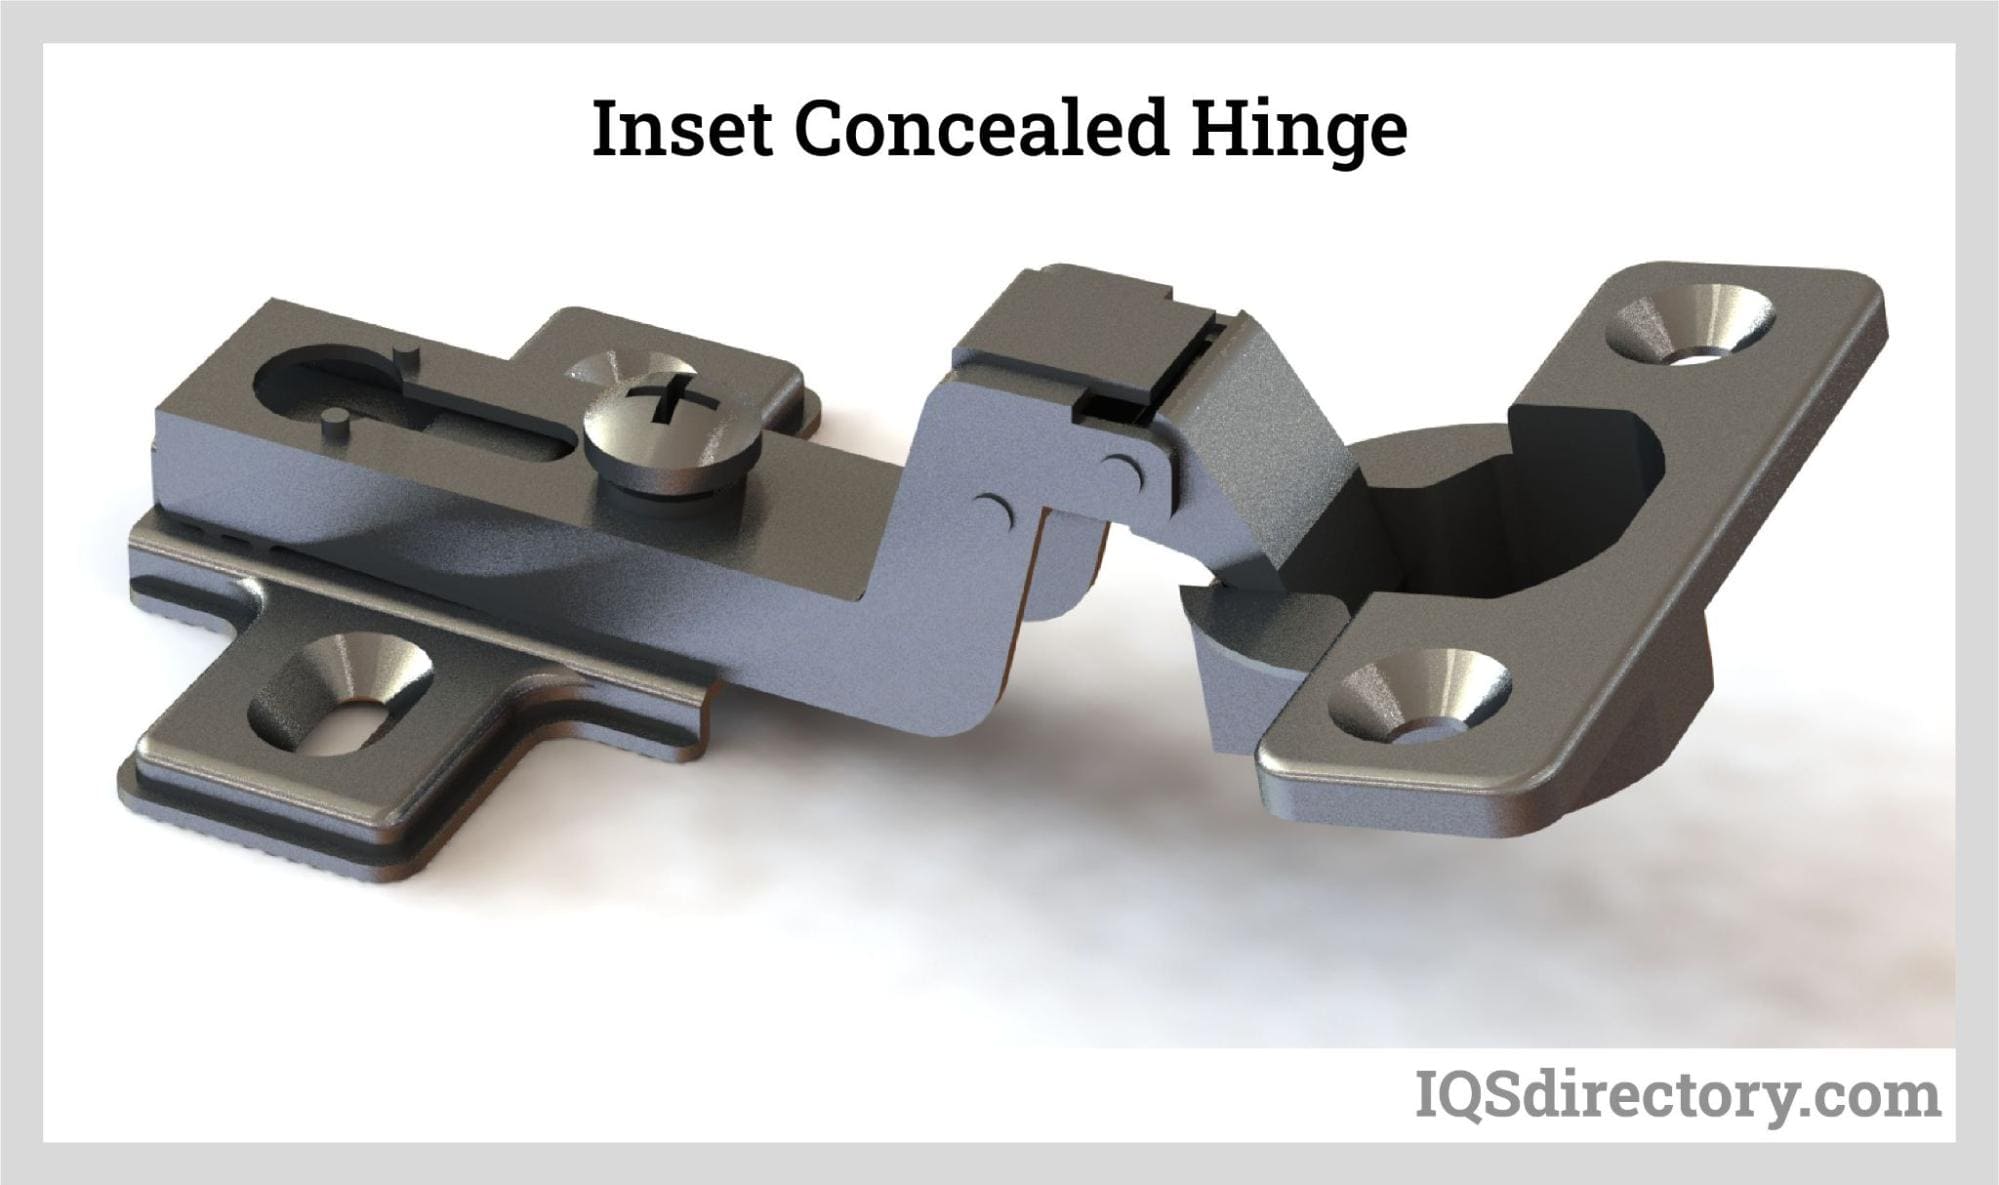 Inset Concealed Hinge